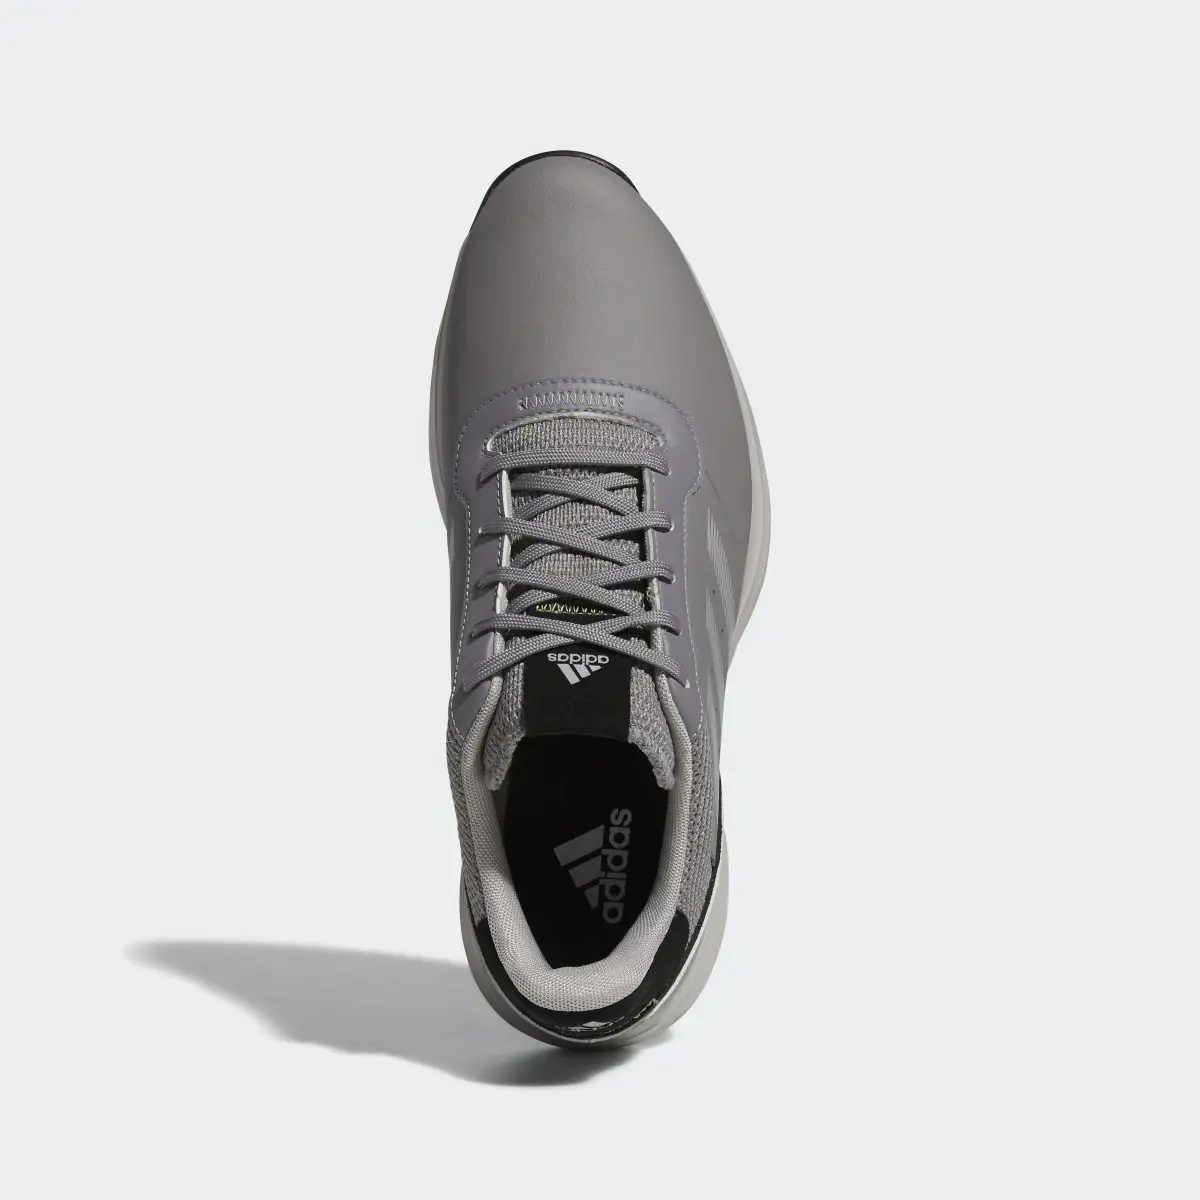 Adidas Scarpe da golf S2G Spikeless Leather. 3